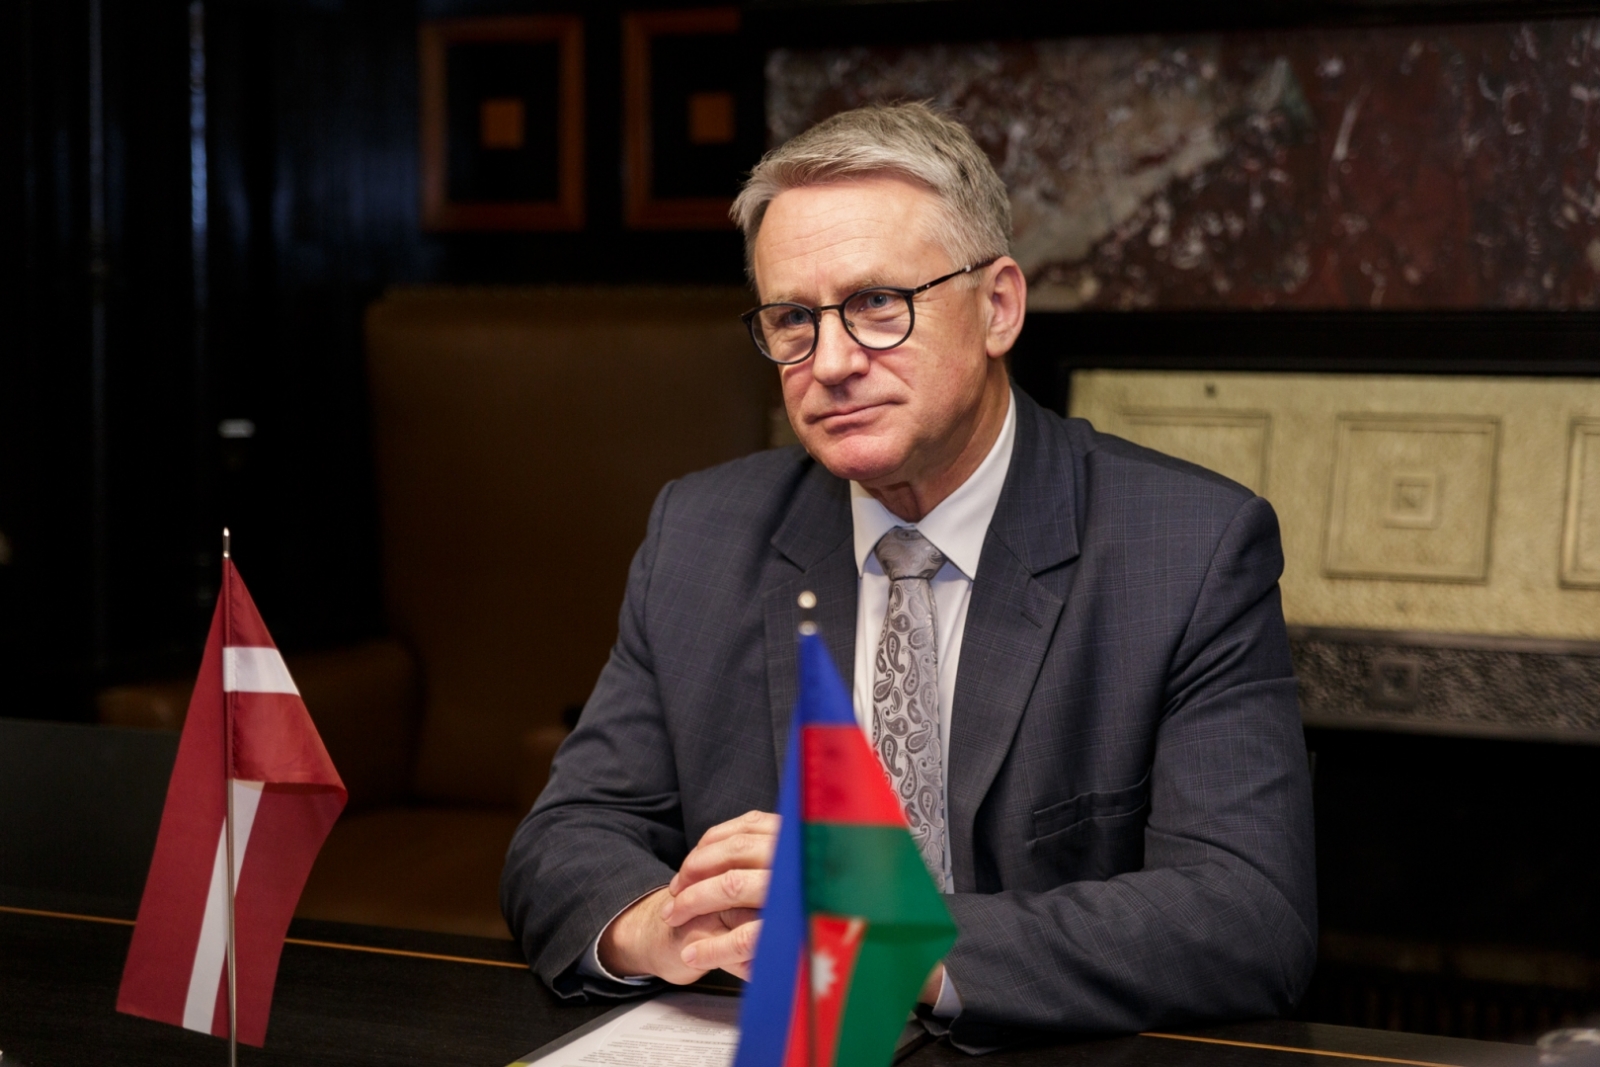 Kultūras ministrs Nauris Puntulis tiekas ar Azerbaidžānas Republikas vēstnieku Latvijā V.E. Elnuru Sultanovu (Elnur Sultanov)